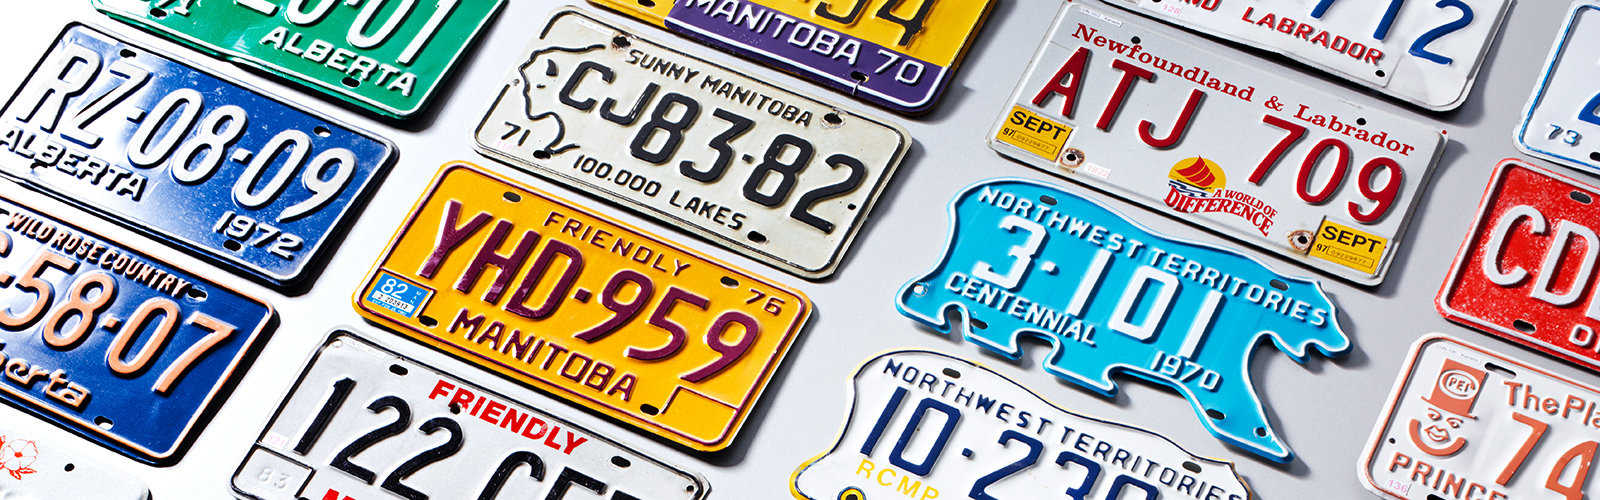 License plates & blanks